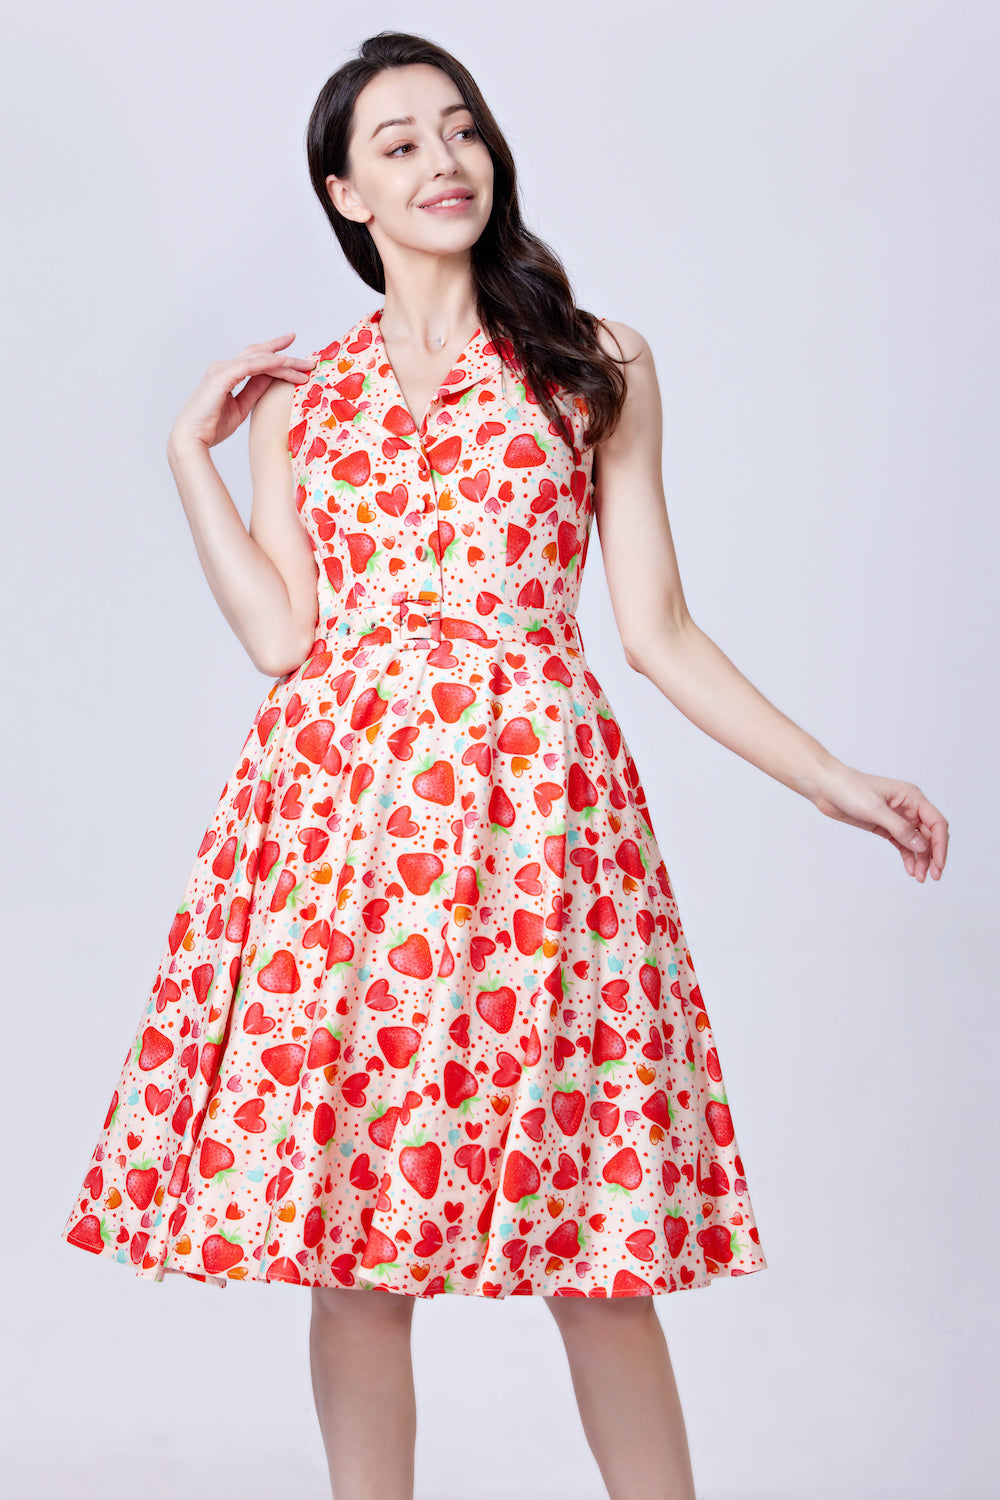 Strawberry Hearts Dress